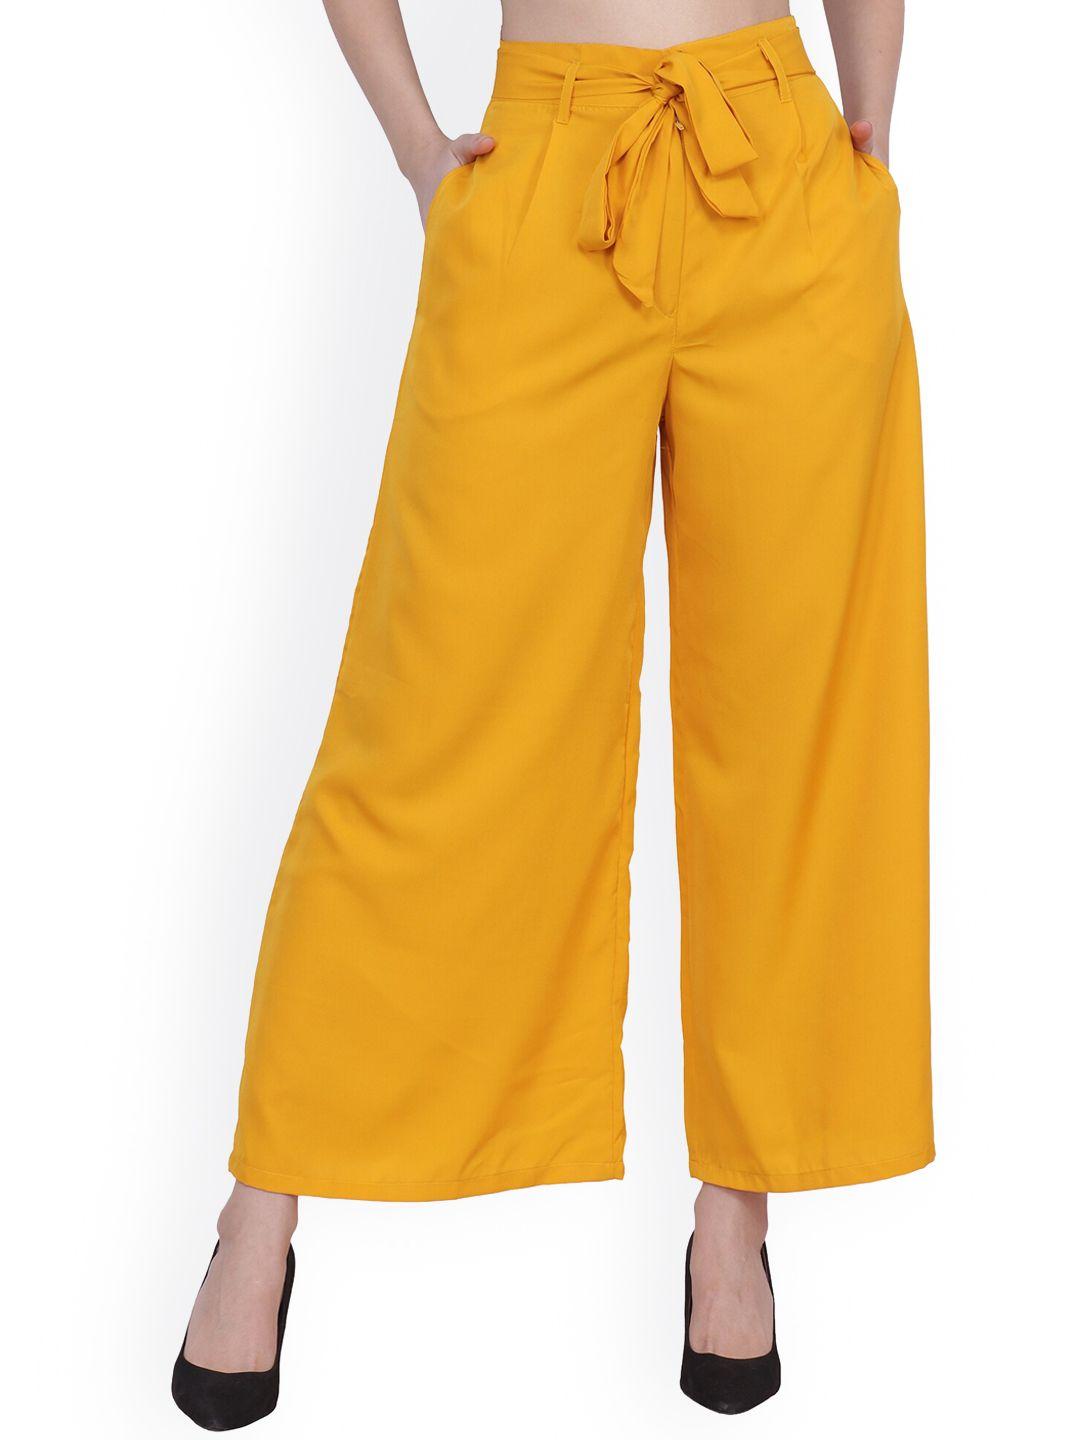 frempy women yellow original trousers